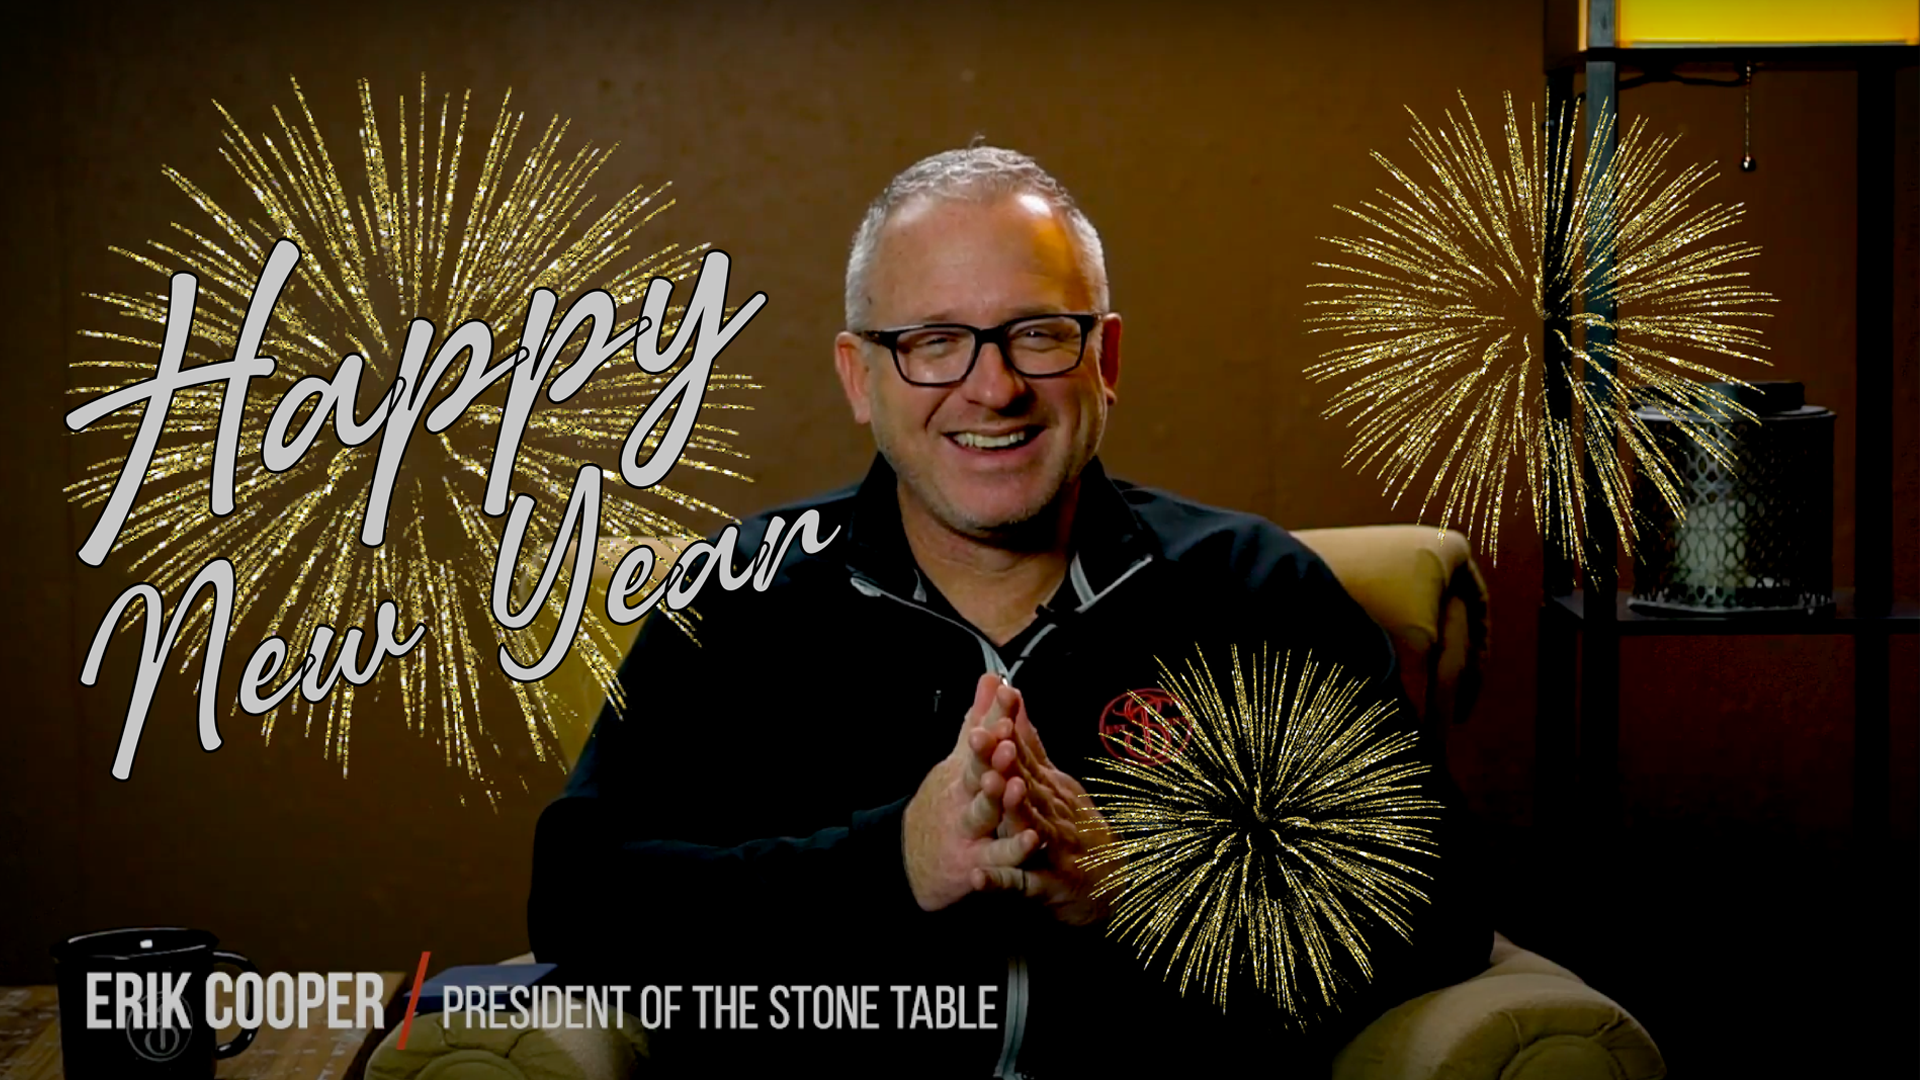 VIDEO: Happy New Year